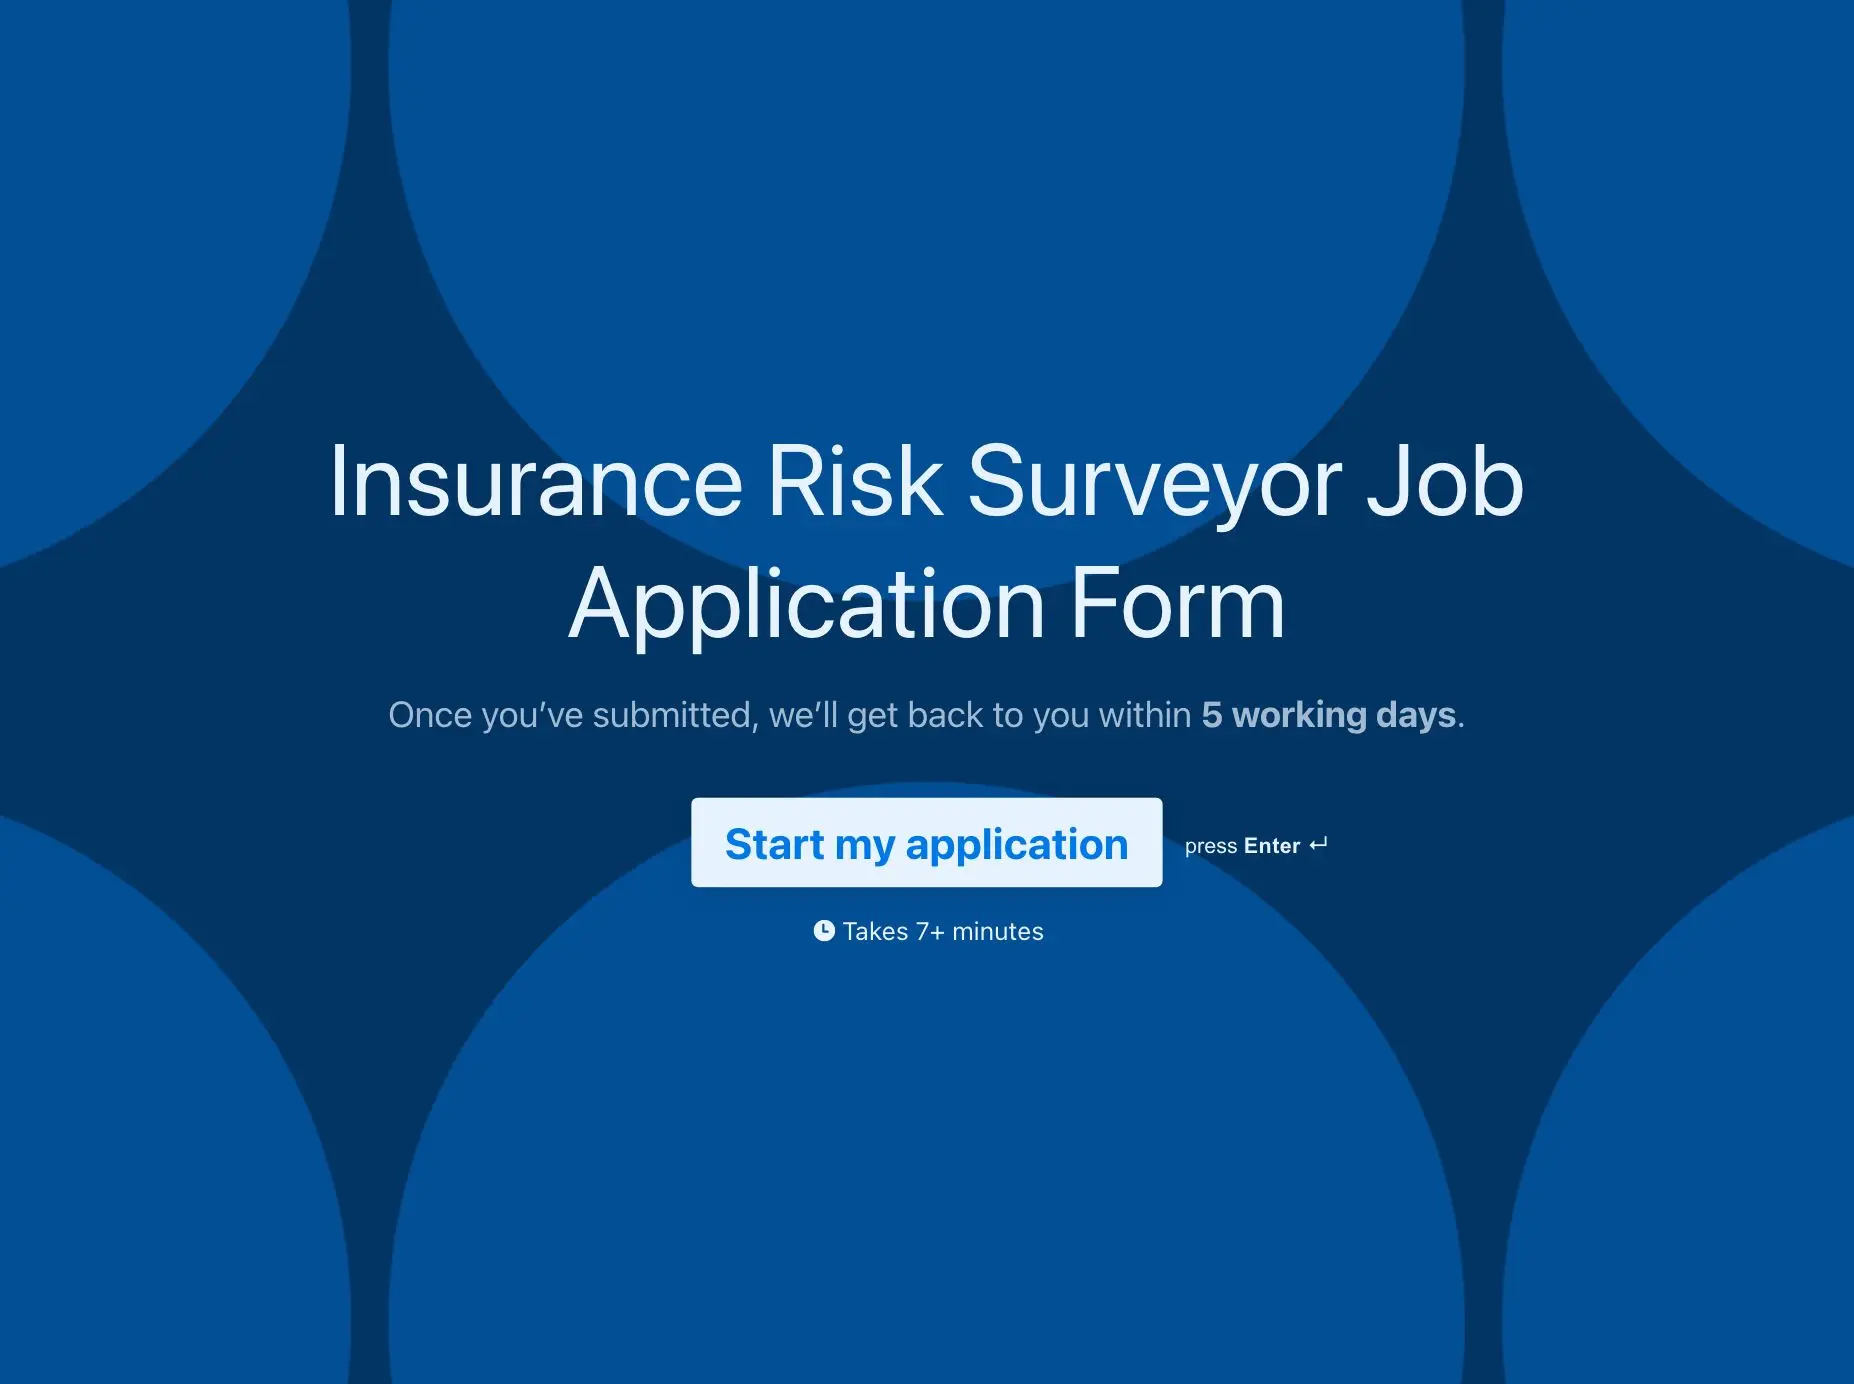 Insurance Risk Surveyor Job Application Form Template Hero